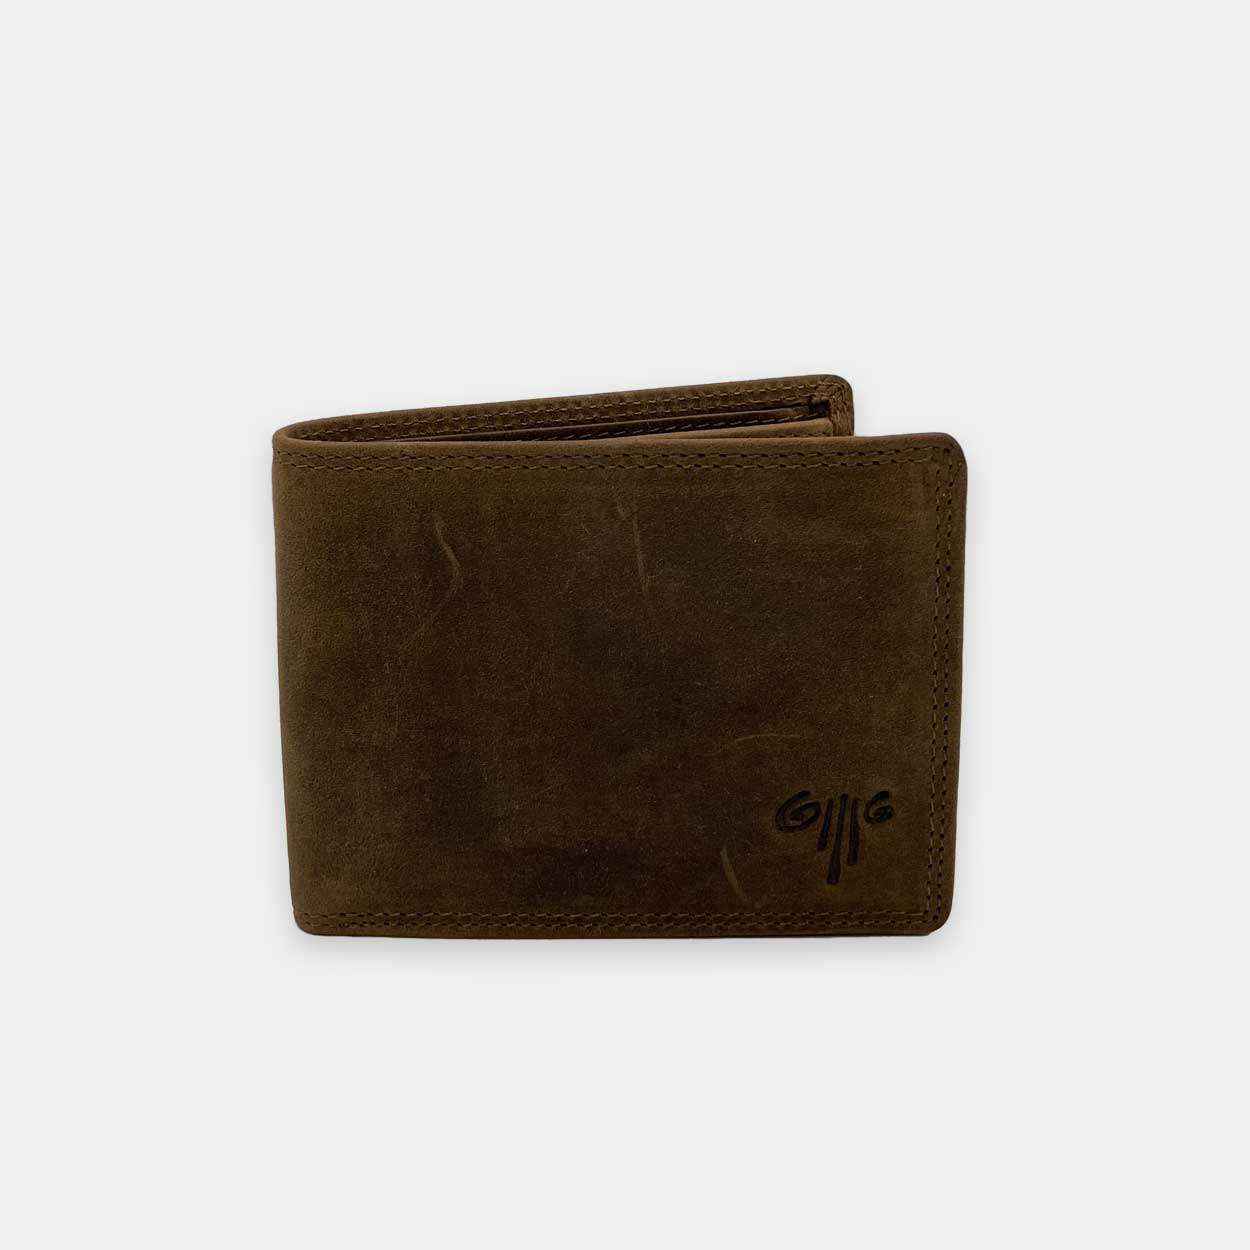 kion leather men wallet